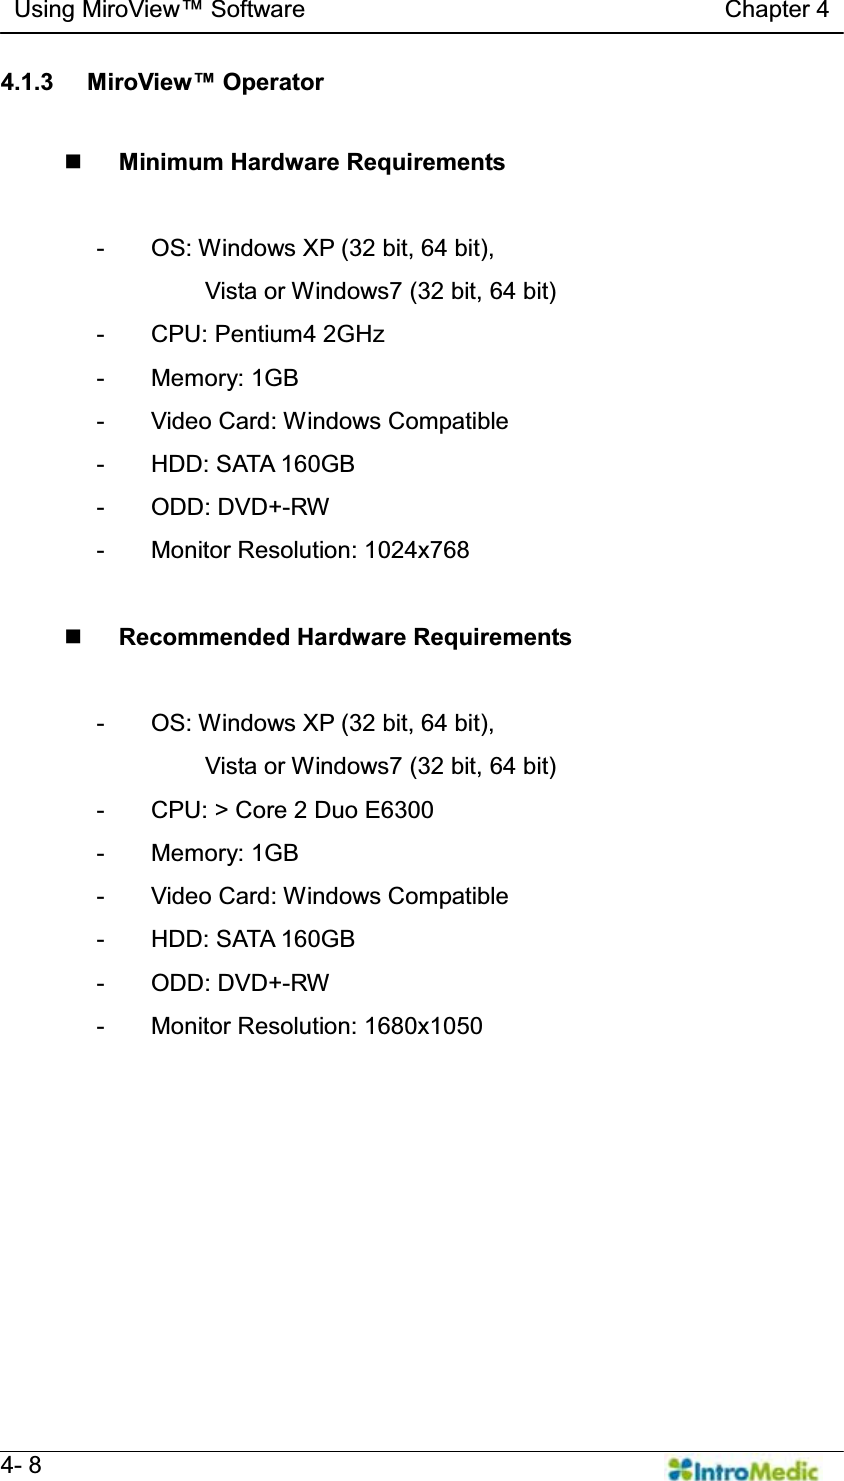   Using MiroView Software                                   Chapter 4   4- 8 4.1.3  0LUR9LHZOperator   Minimum Hardware Requirements  -  OS: Windows XP (32 bit, 64 bit),   Vista or Windows7 (32 bit, 64 bit) - CPU: Pentium4 2GHz - Memory: 1GB -  Video Card: Windows Compatible -  HDD: SATA 160GB - ODD: DVD+-RW - Monitor Resolution: 1024x768   Recommended Hardware Requirements  -  OS: Windows XP (32 bit, 64 bit),   Vista or Windows7 (32 bit, 64 bit) -  CPU: &gt; Core 2 Duo E6300 - Memory: 1GB -  Video Card: Windows Compatible -  HDD: SATA 160GB - ODD: DVD+-RW - Monitor Resolution: 1680x1050  